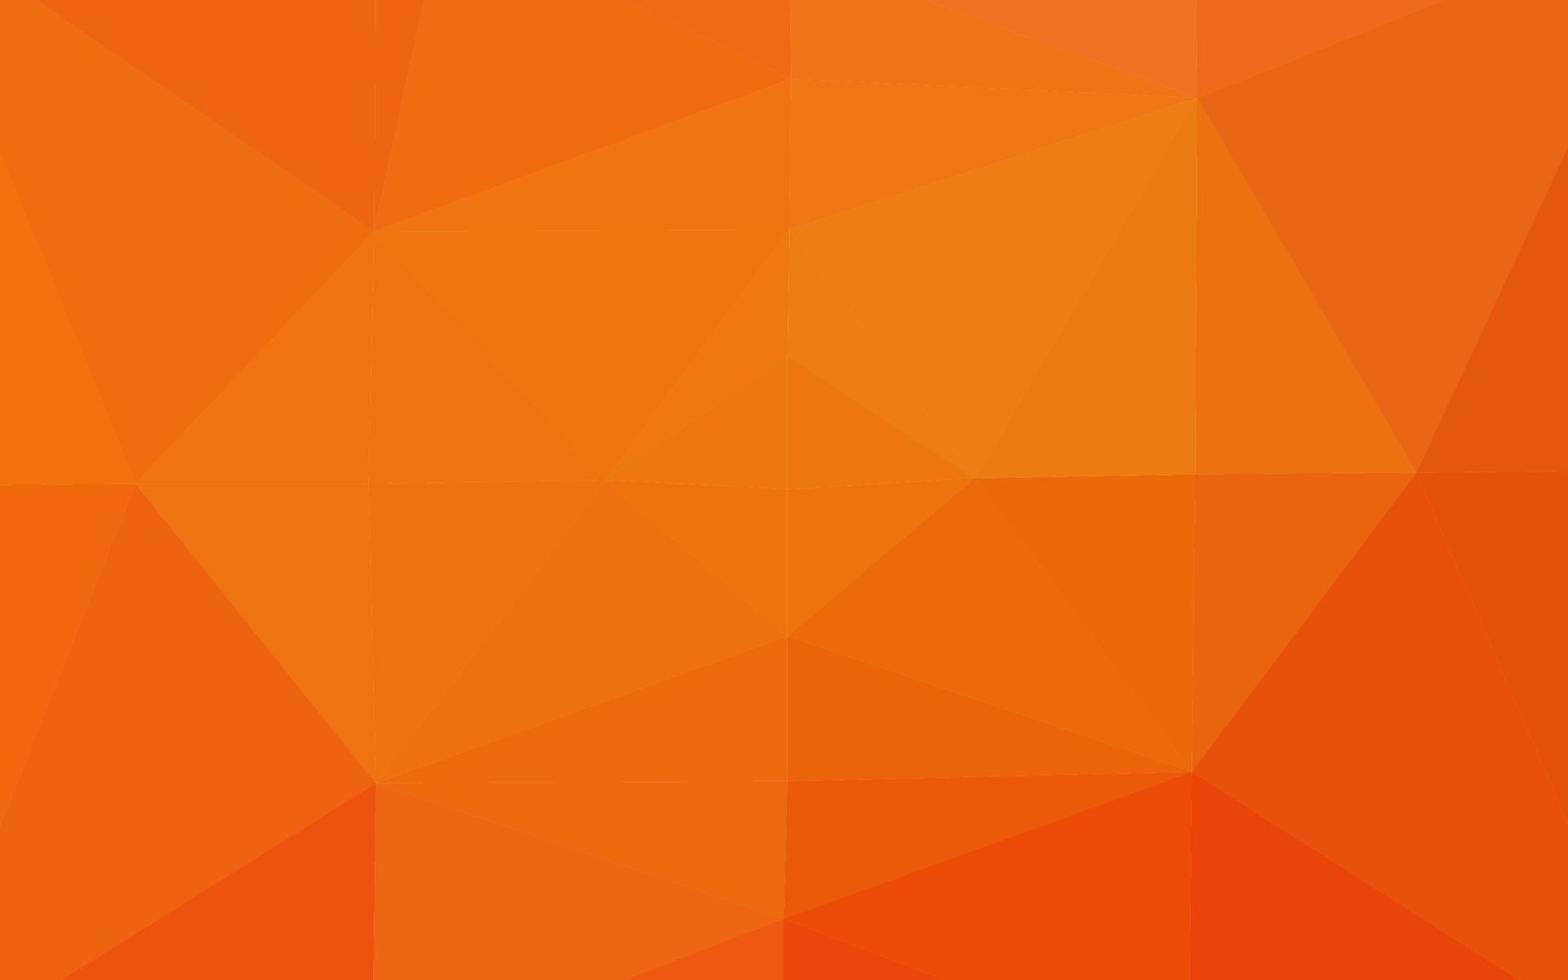 padrão poligonal de vetor laranja claro.